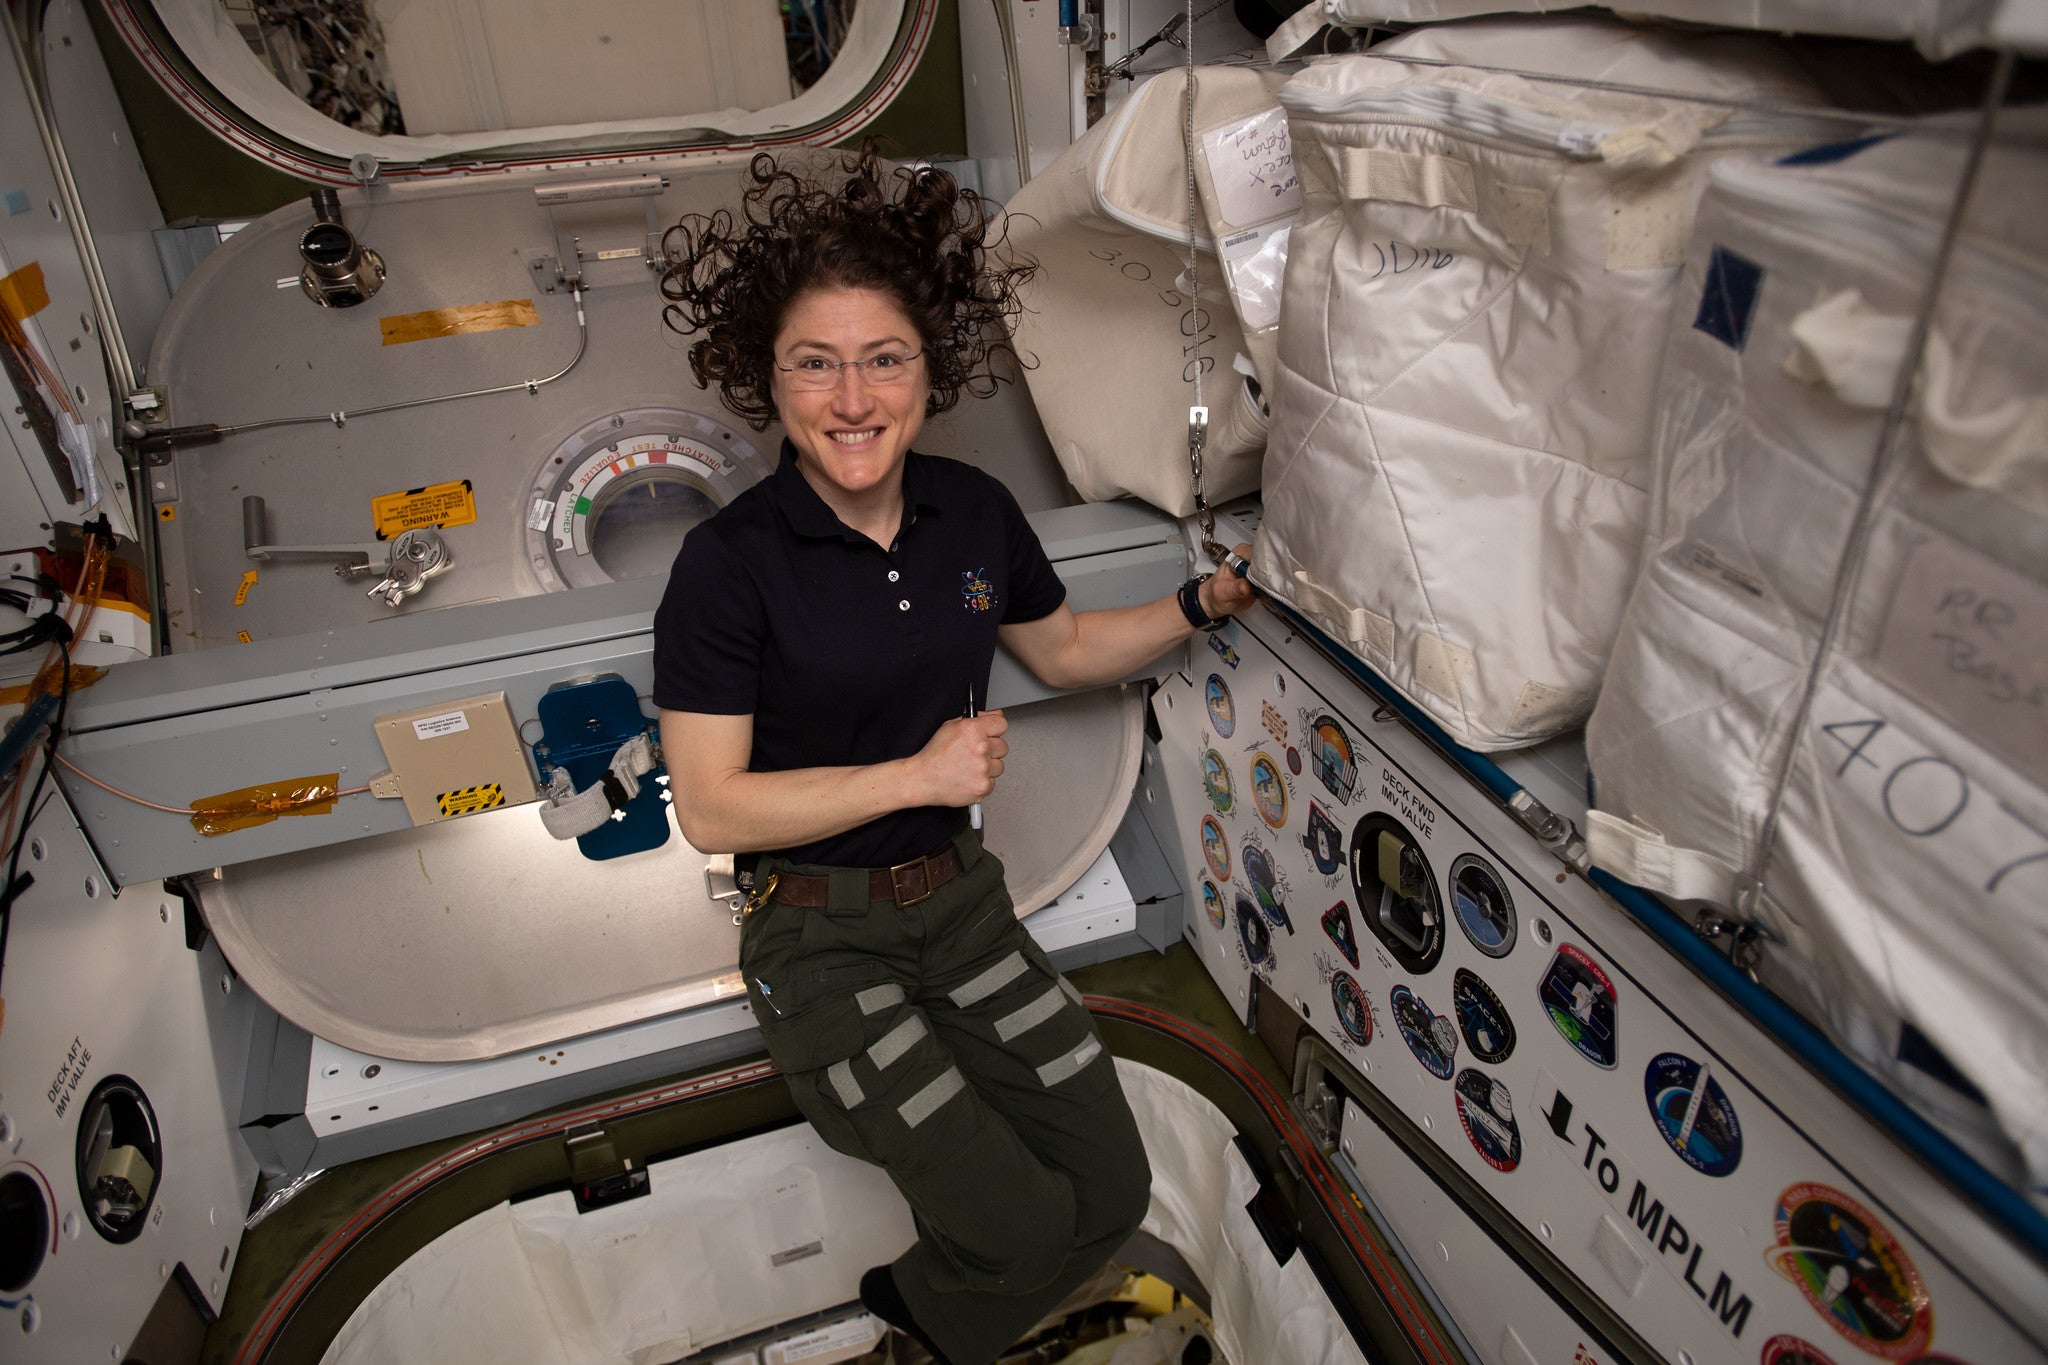 Koch inside a SpaceX Dragon cargo spacecraft, June 2, 2019.  (Photo: NASA)